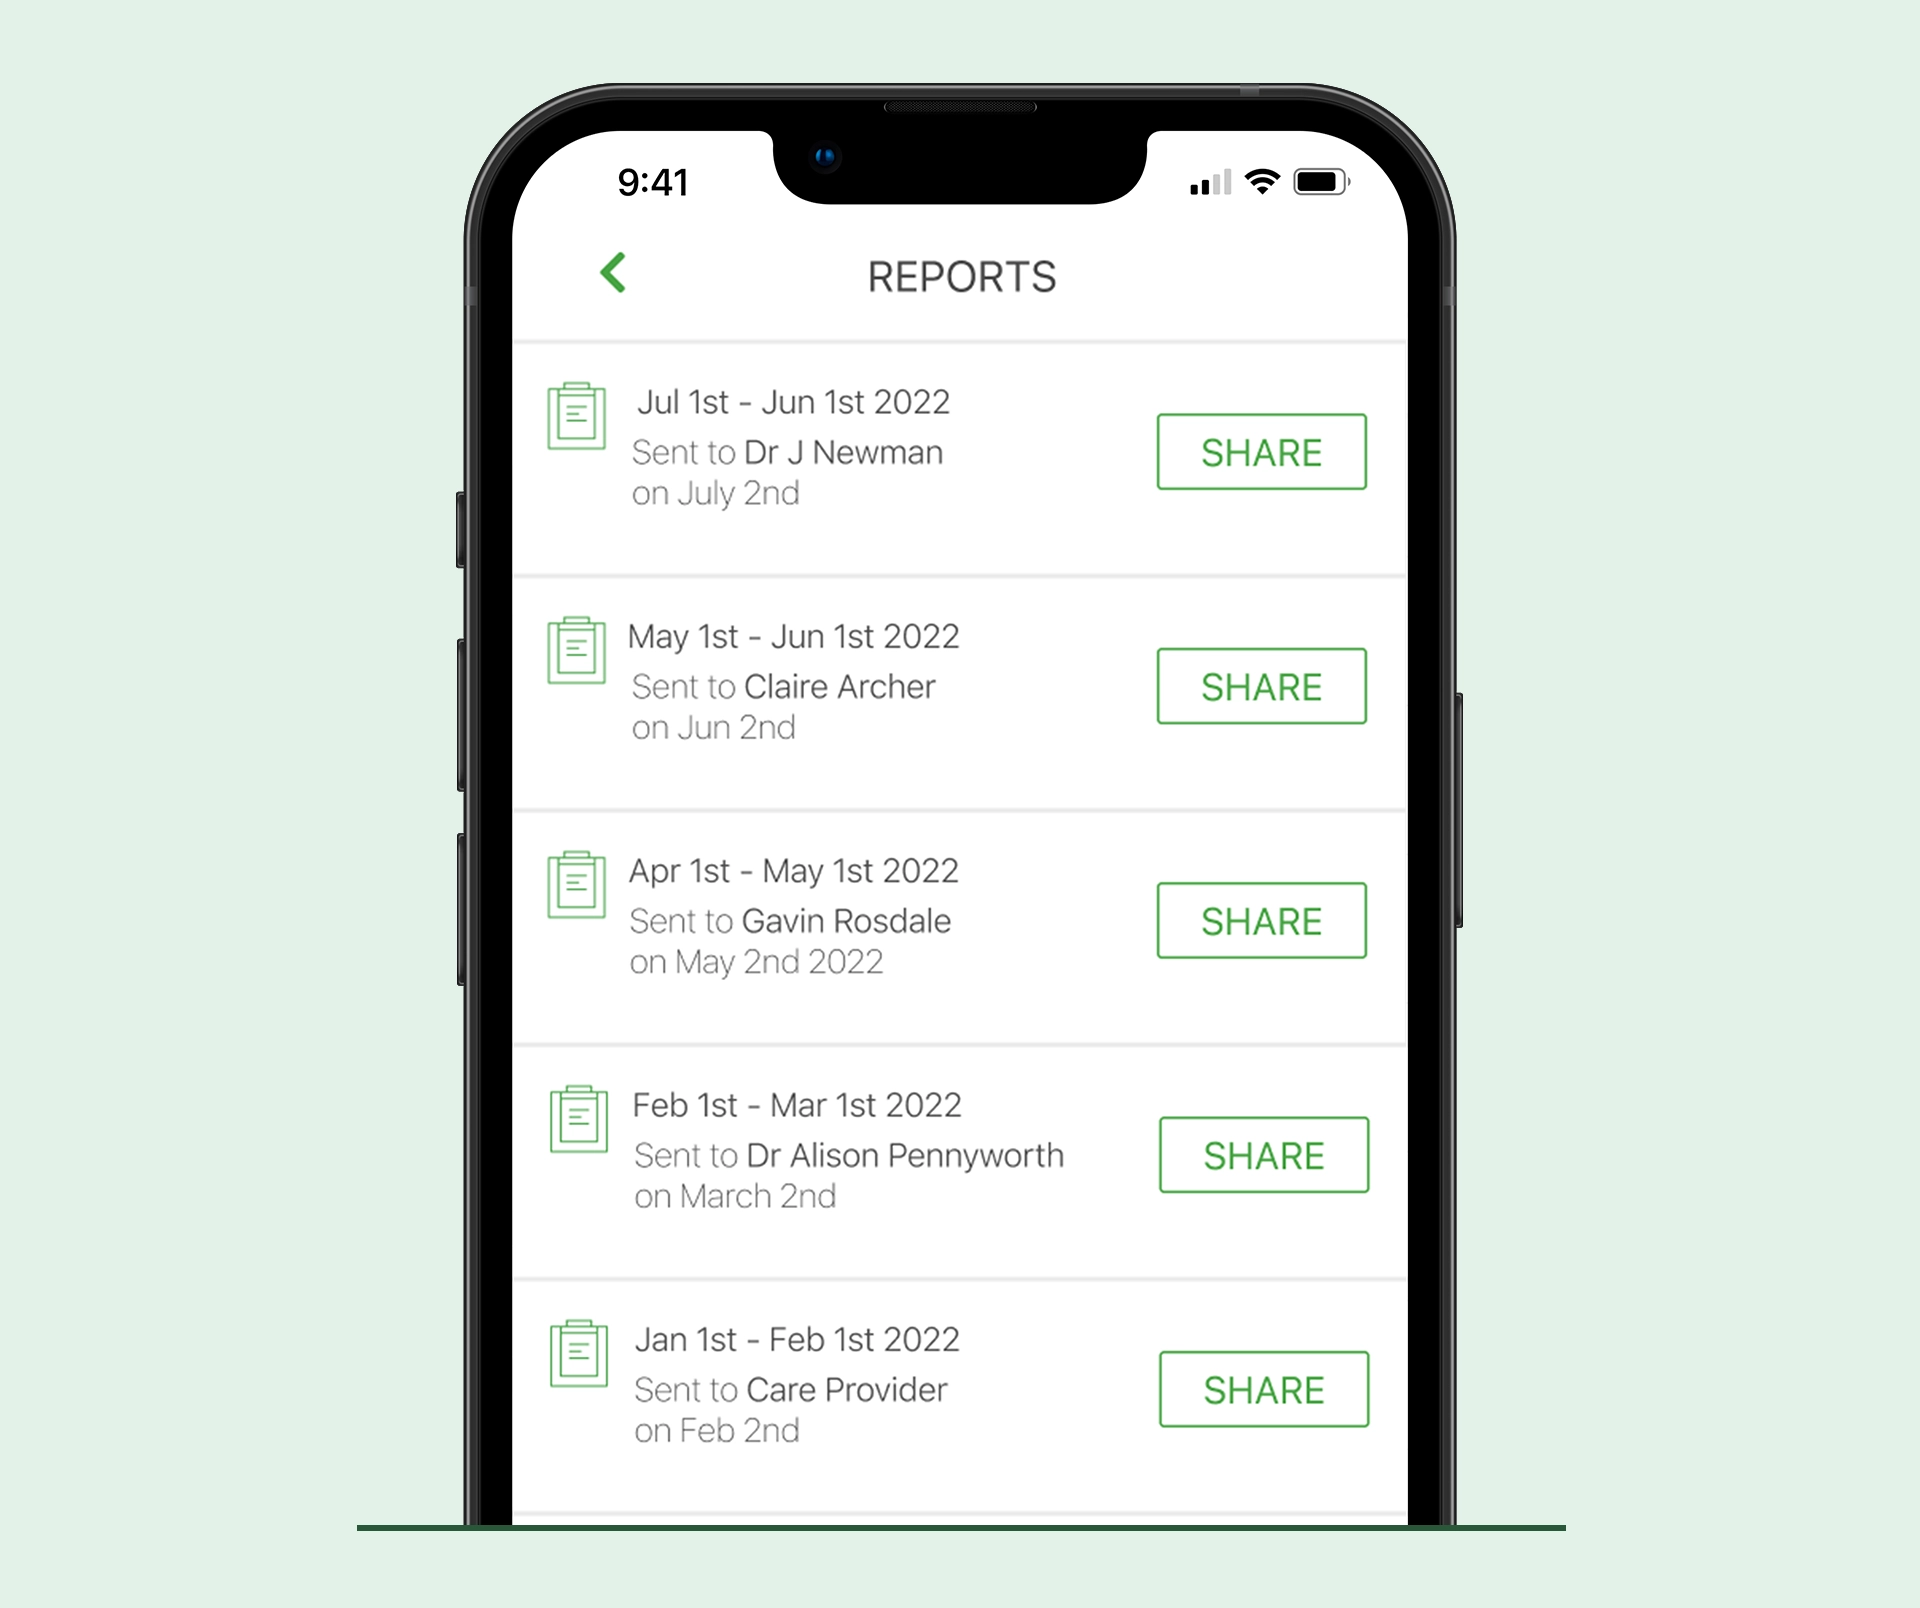 iOS zeigt den Bildschirm der Qardio App Berichte